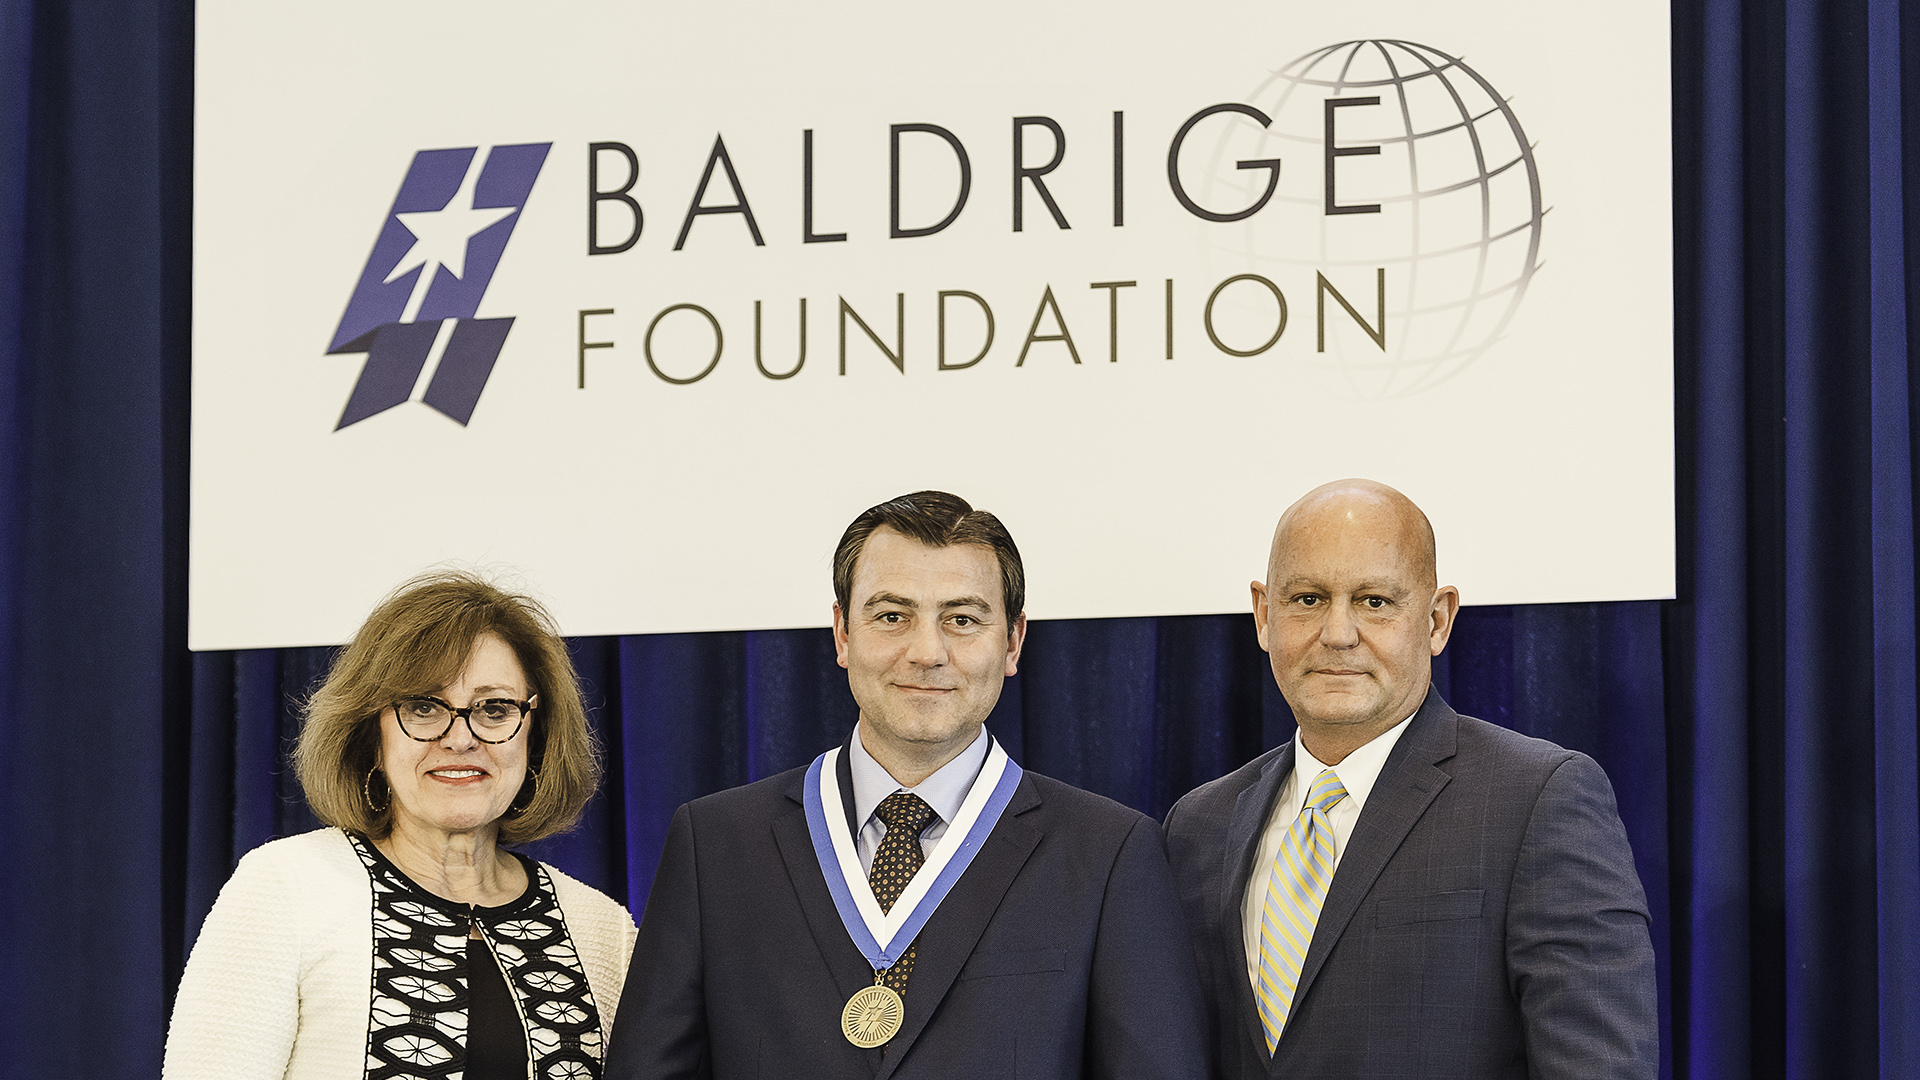 BZI CEO James Barlow Receives Baldrige Foundation Award for Leadership Excellence